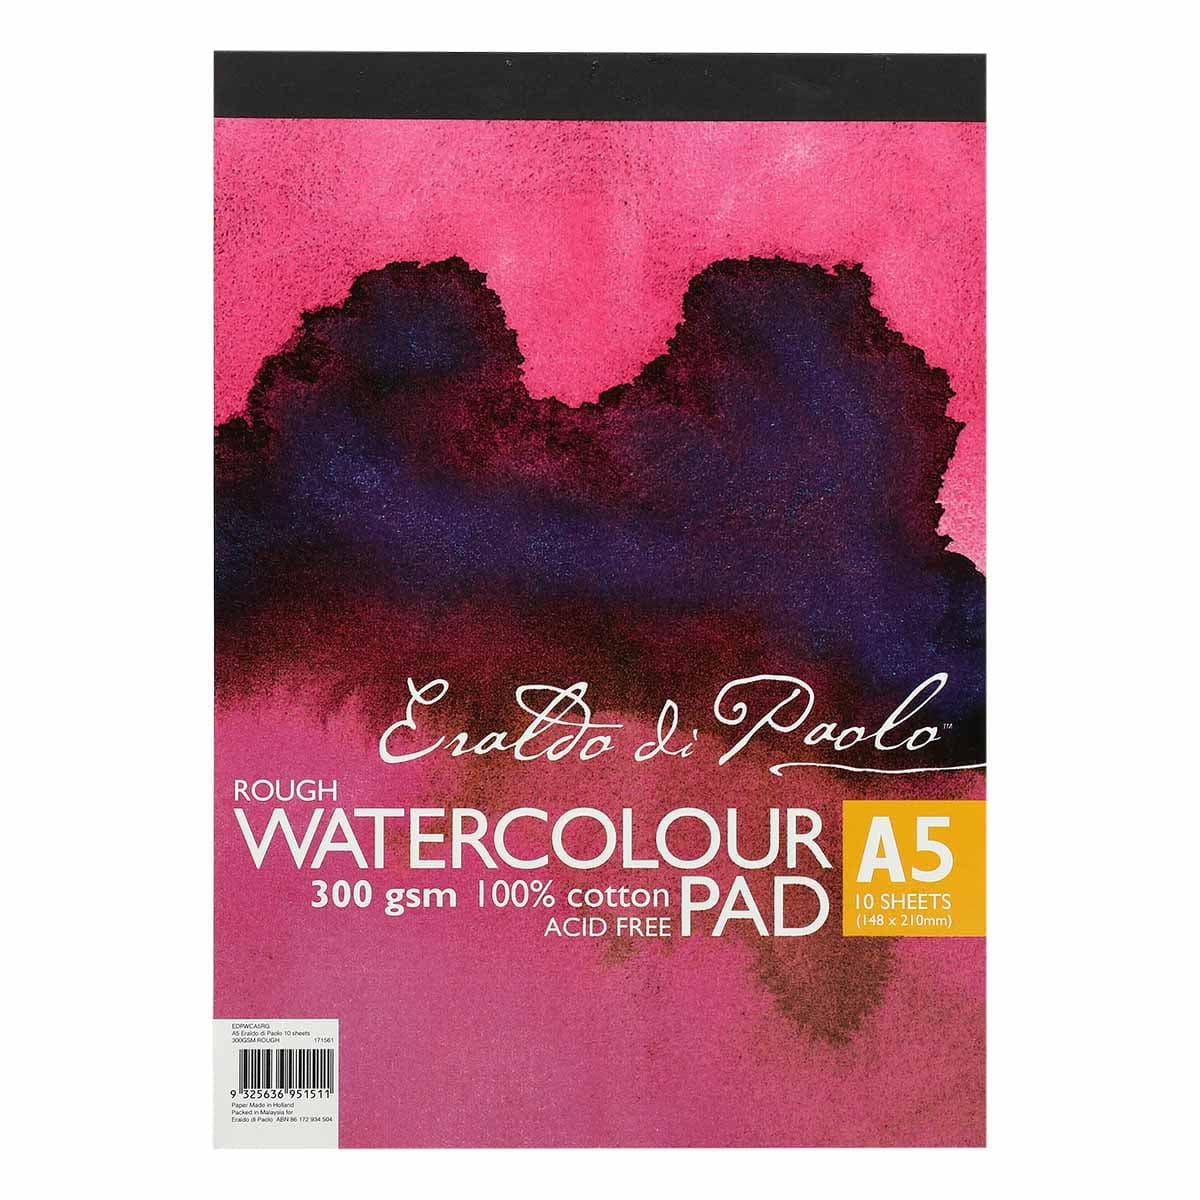 Image of Eraldo Di Paolo Watercolour Pad Rough 300gsm A5 10 Sheets